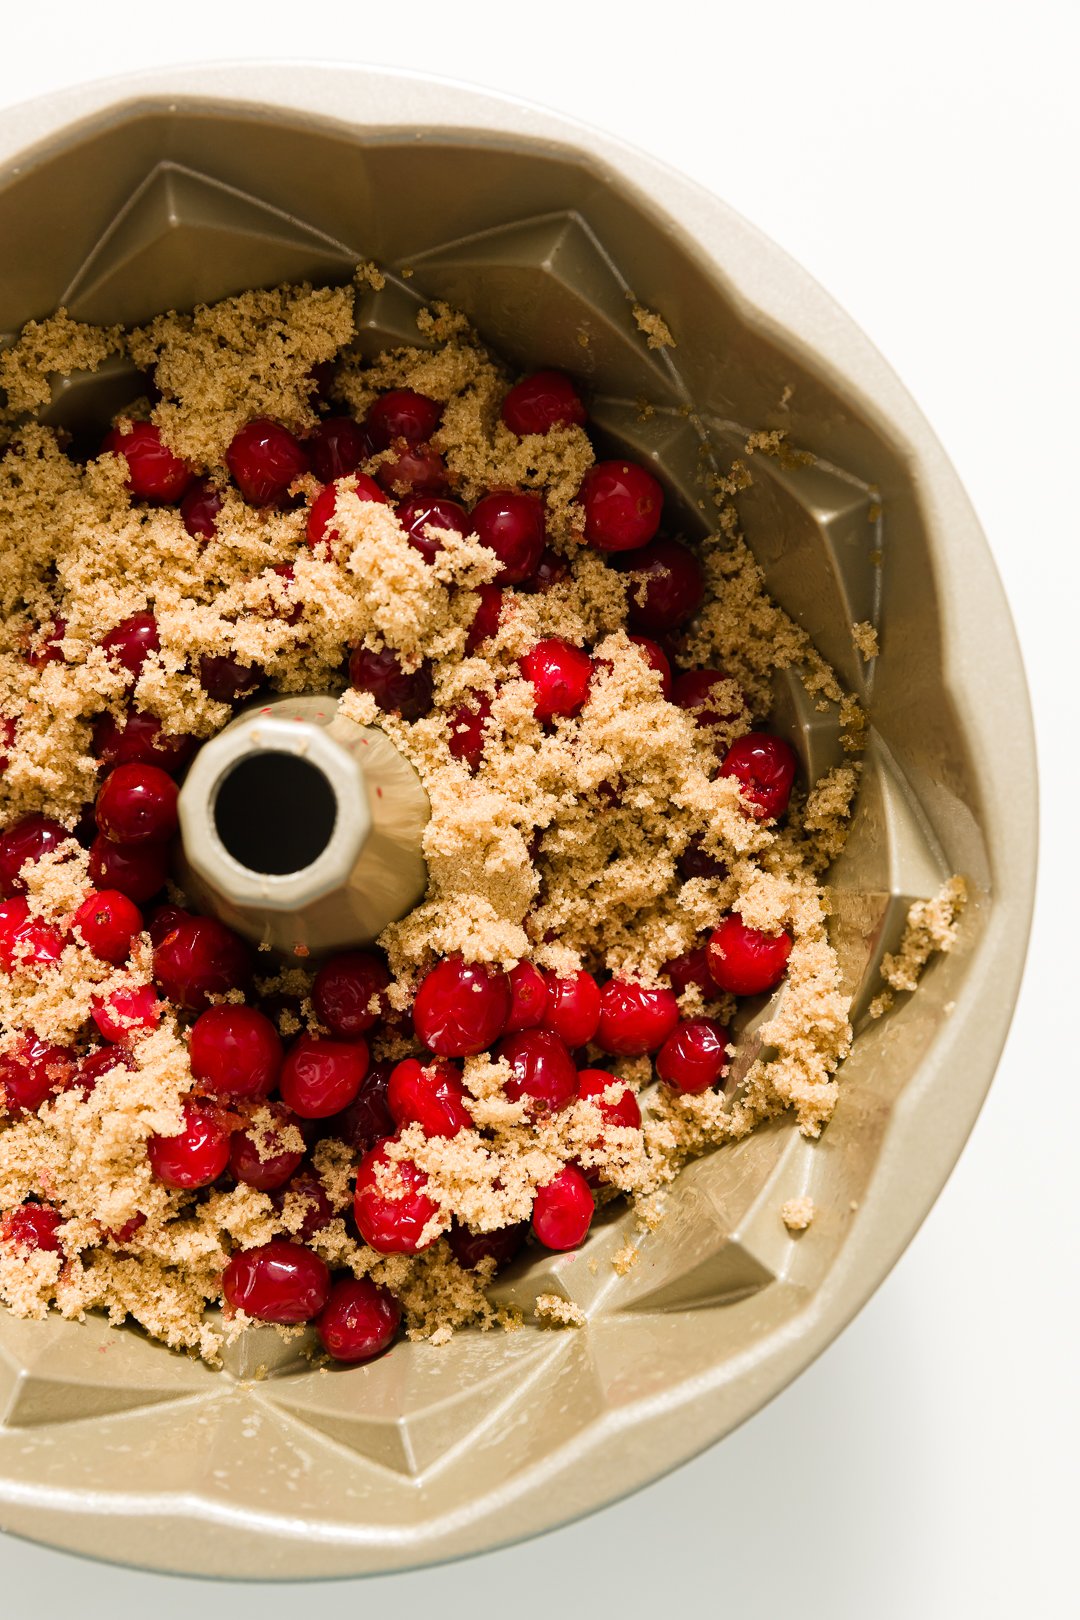 Brown sugar and cranberries in a bundt pan